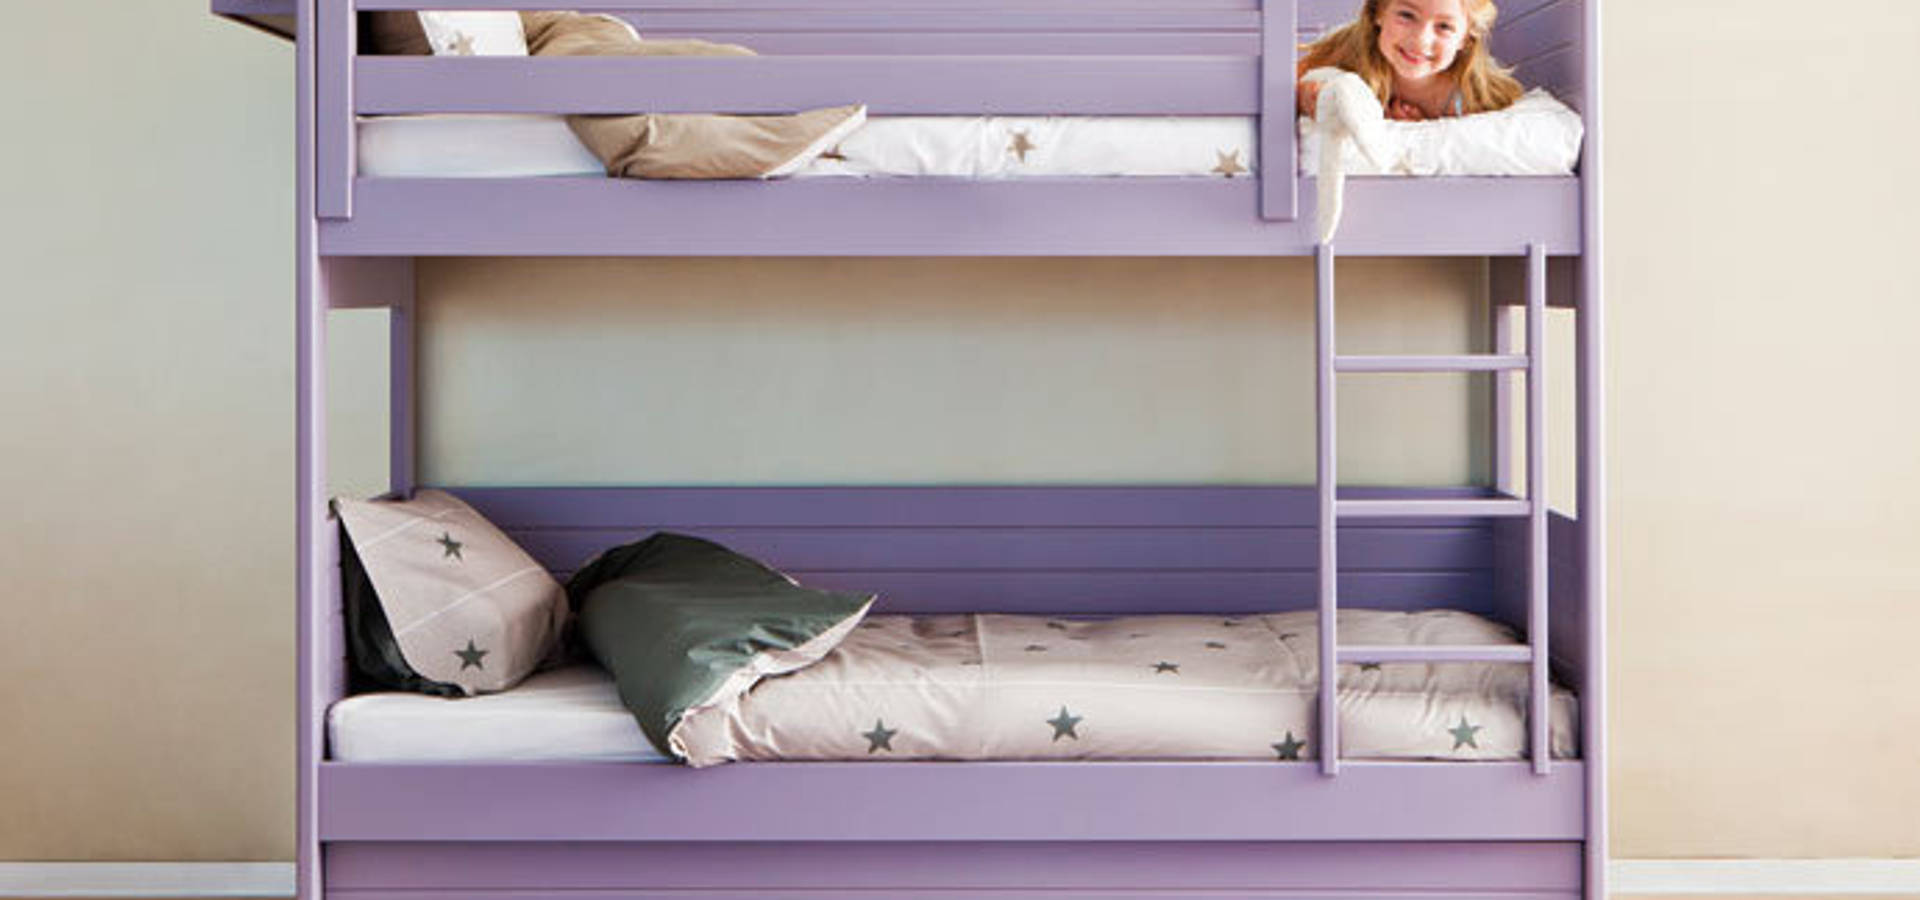 Sofá cama pequeño, con medidas reducidas - Sofas Camas Cruces